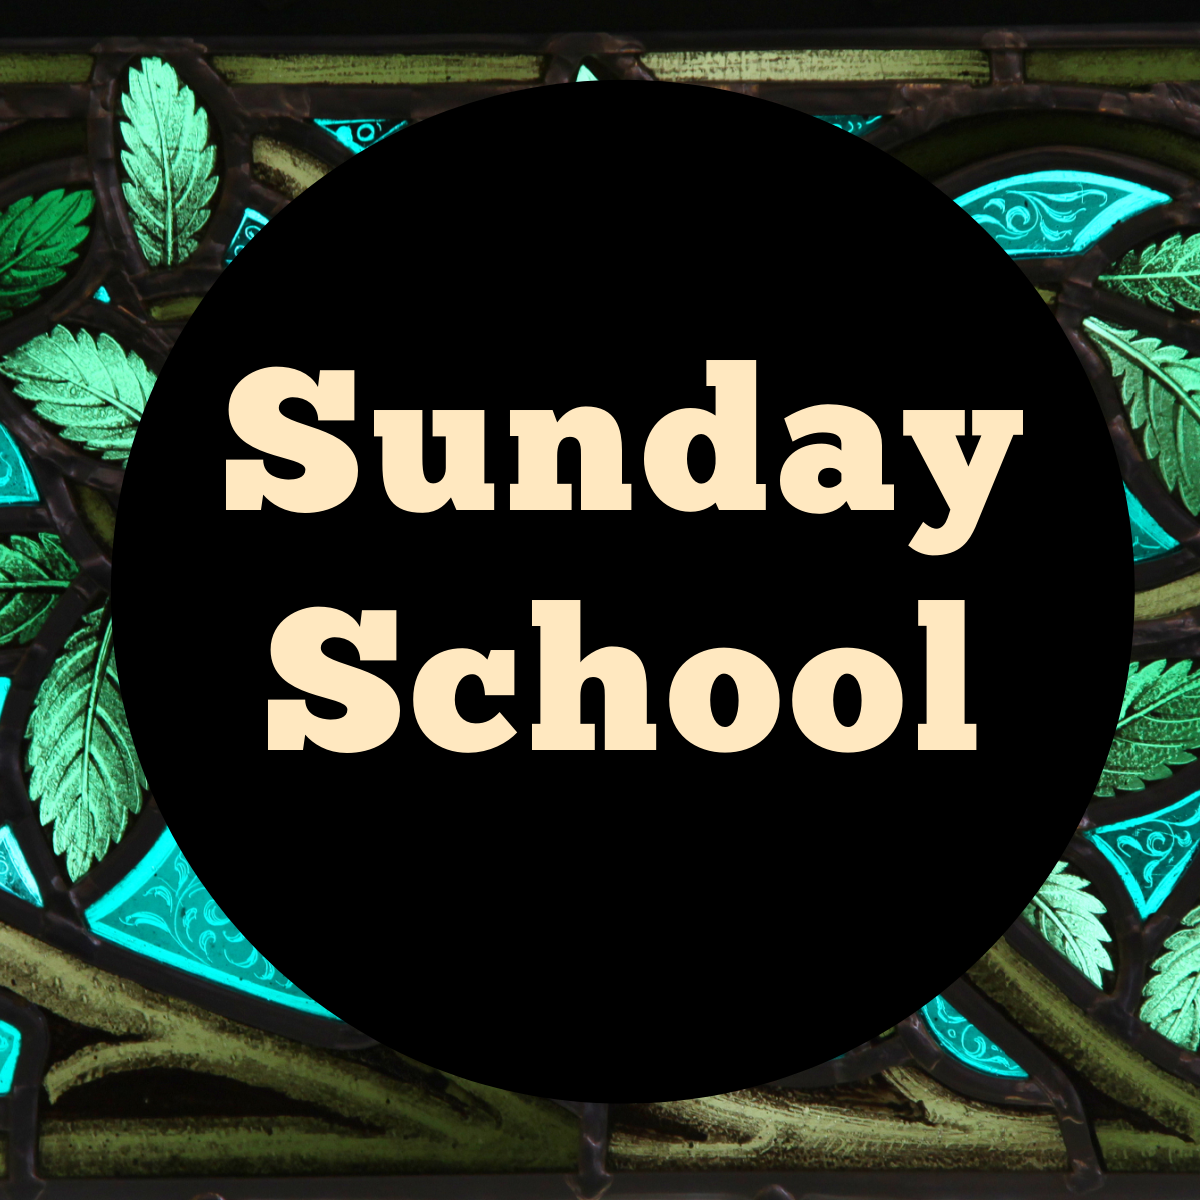 Sunday School G website image